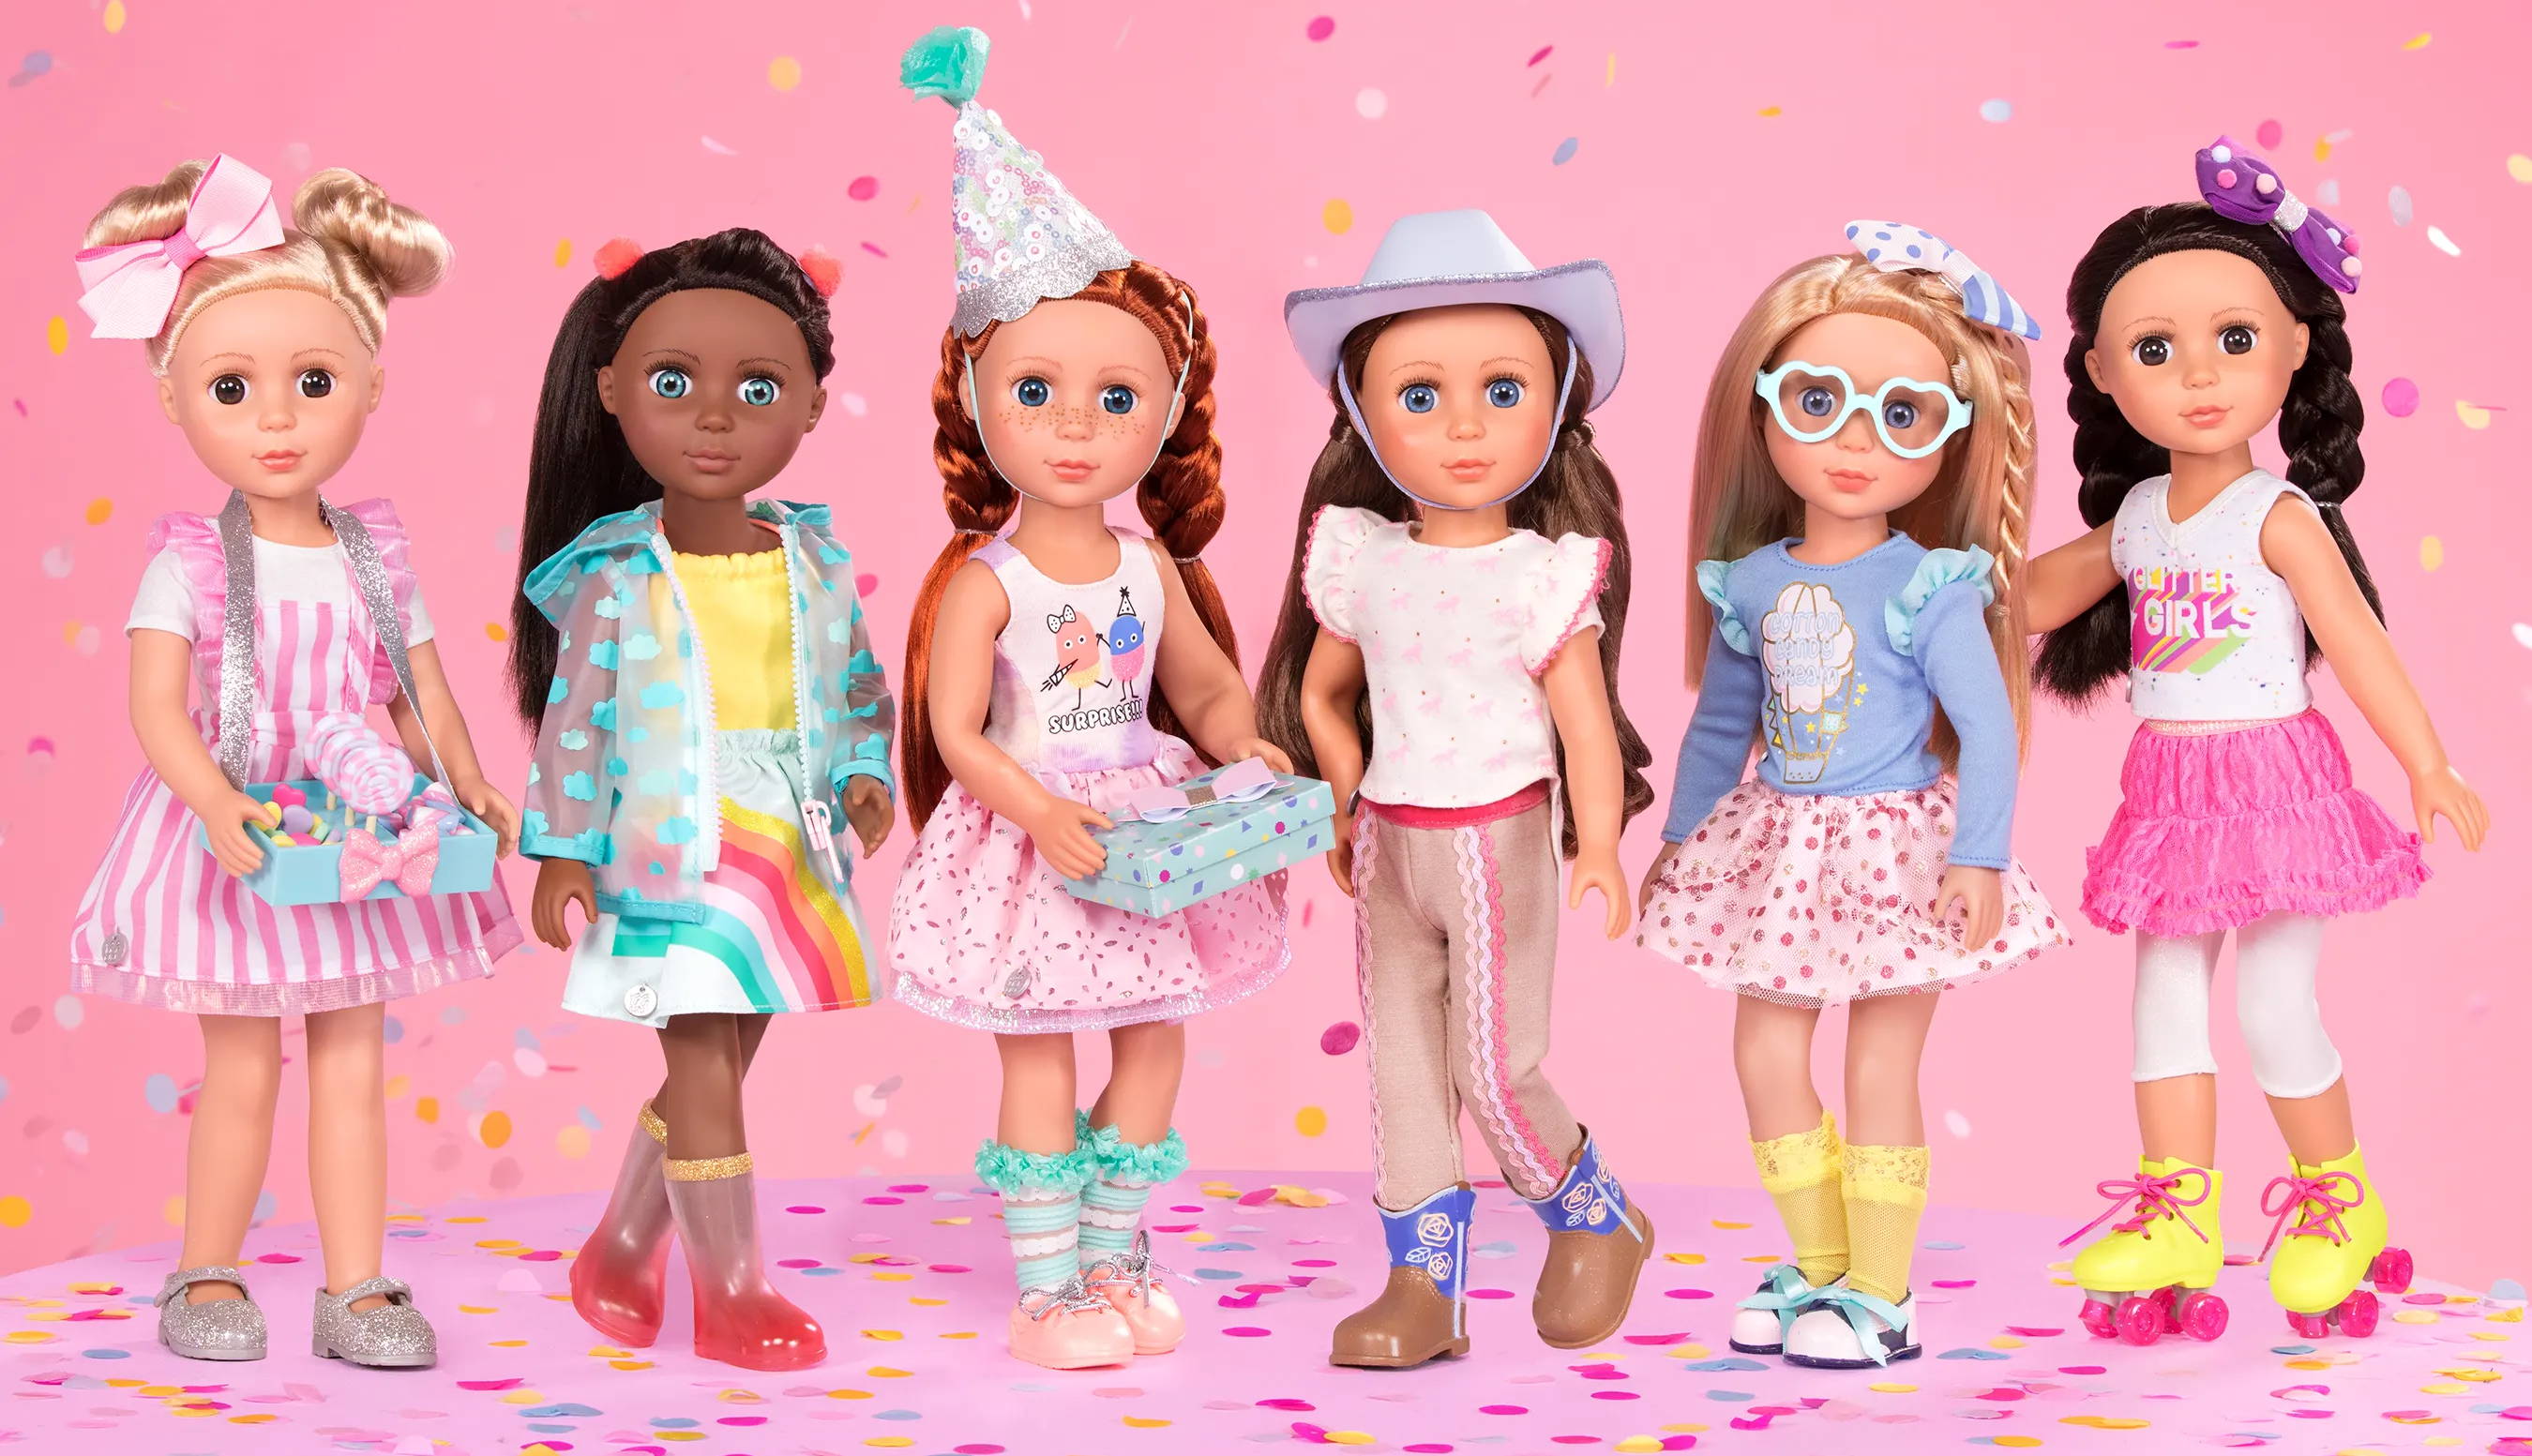 Meet the Glitter Girls, doughnut, doll, creativity, costume accessory,  Hudson Yards